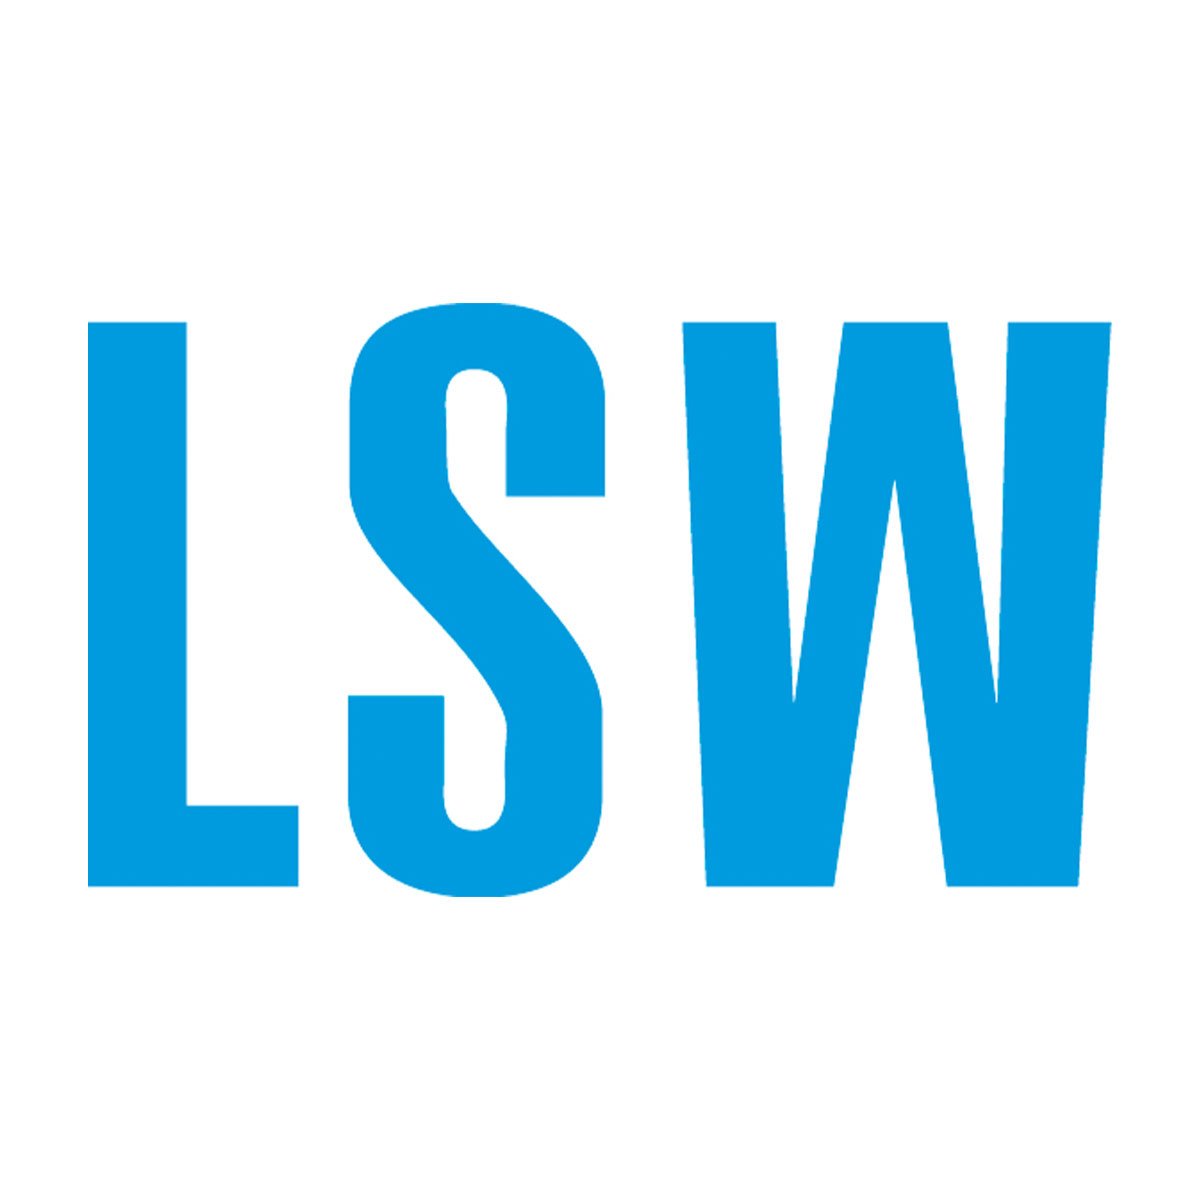 Seefest Allersee LSW Logo